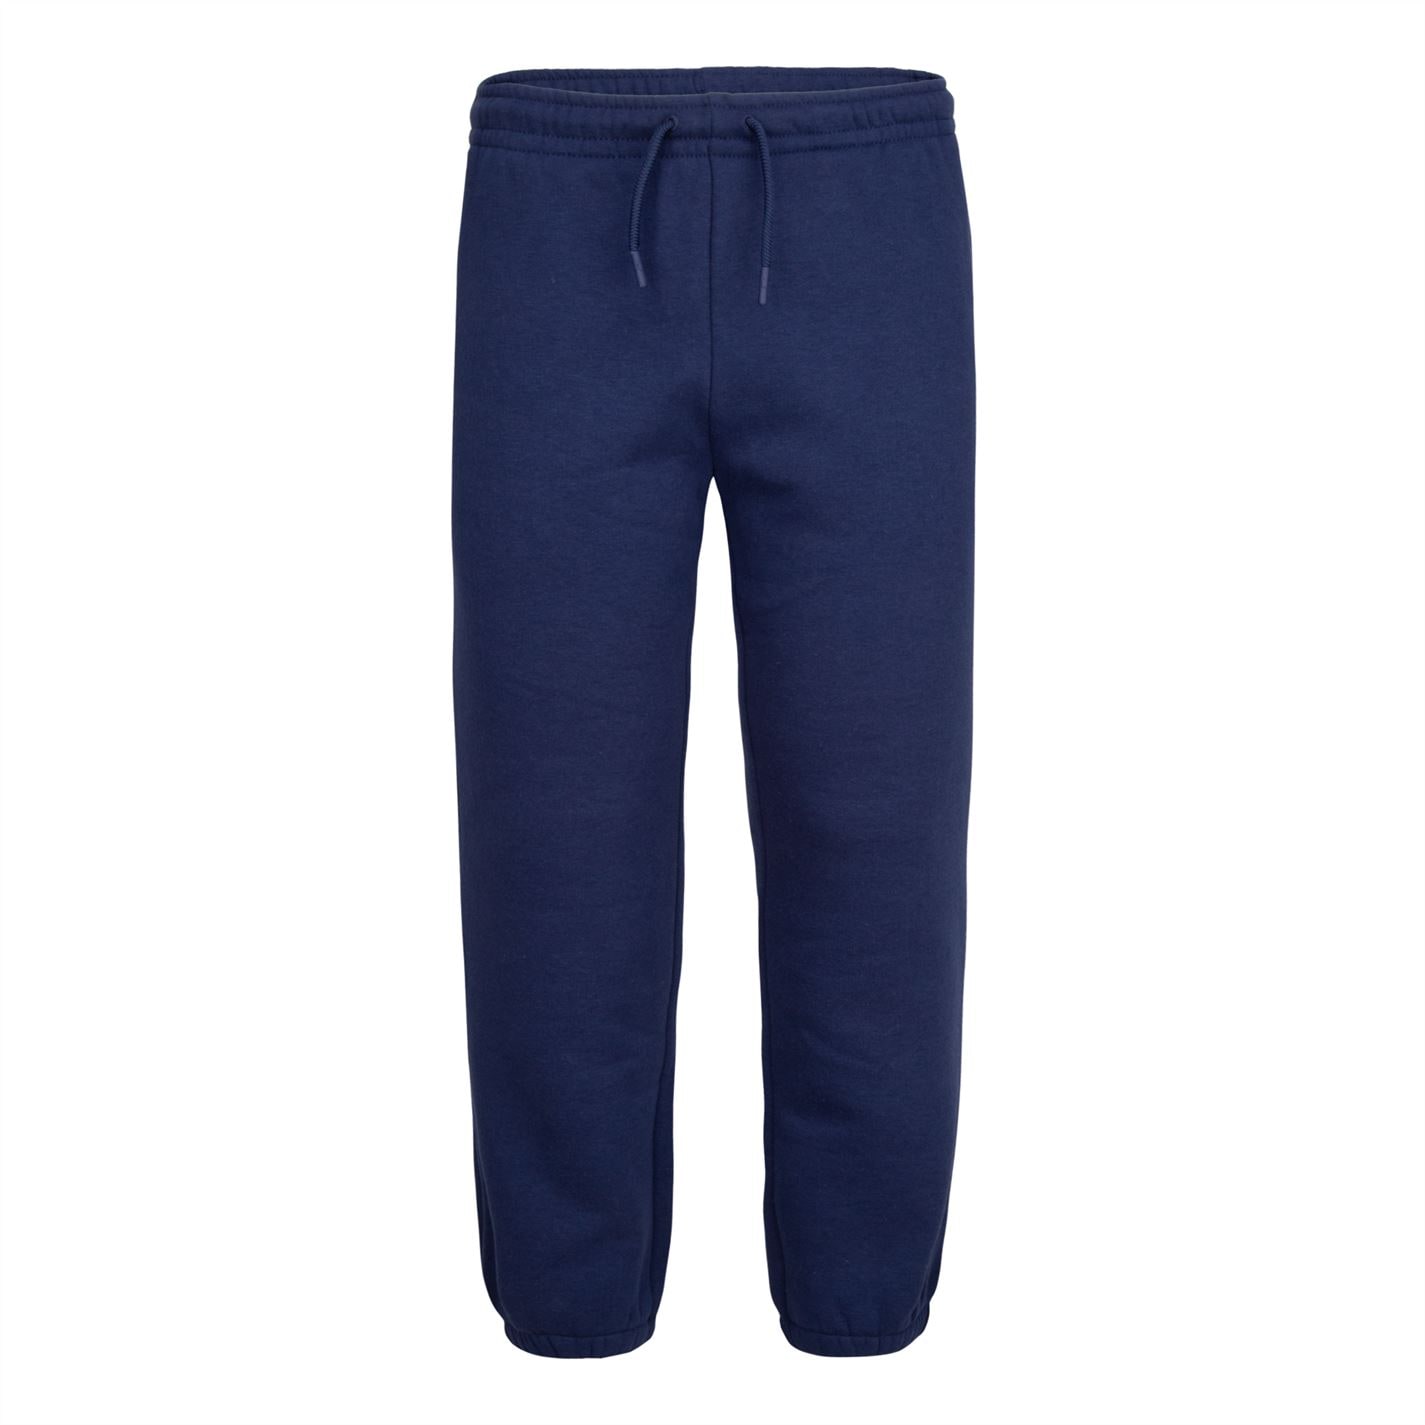 Pantaloni caldurosi Air Jordan JM pentru baietei albastru bleumarin